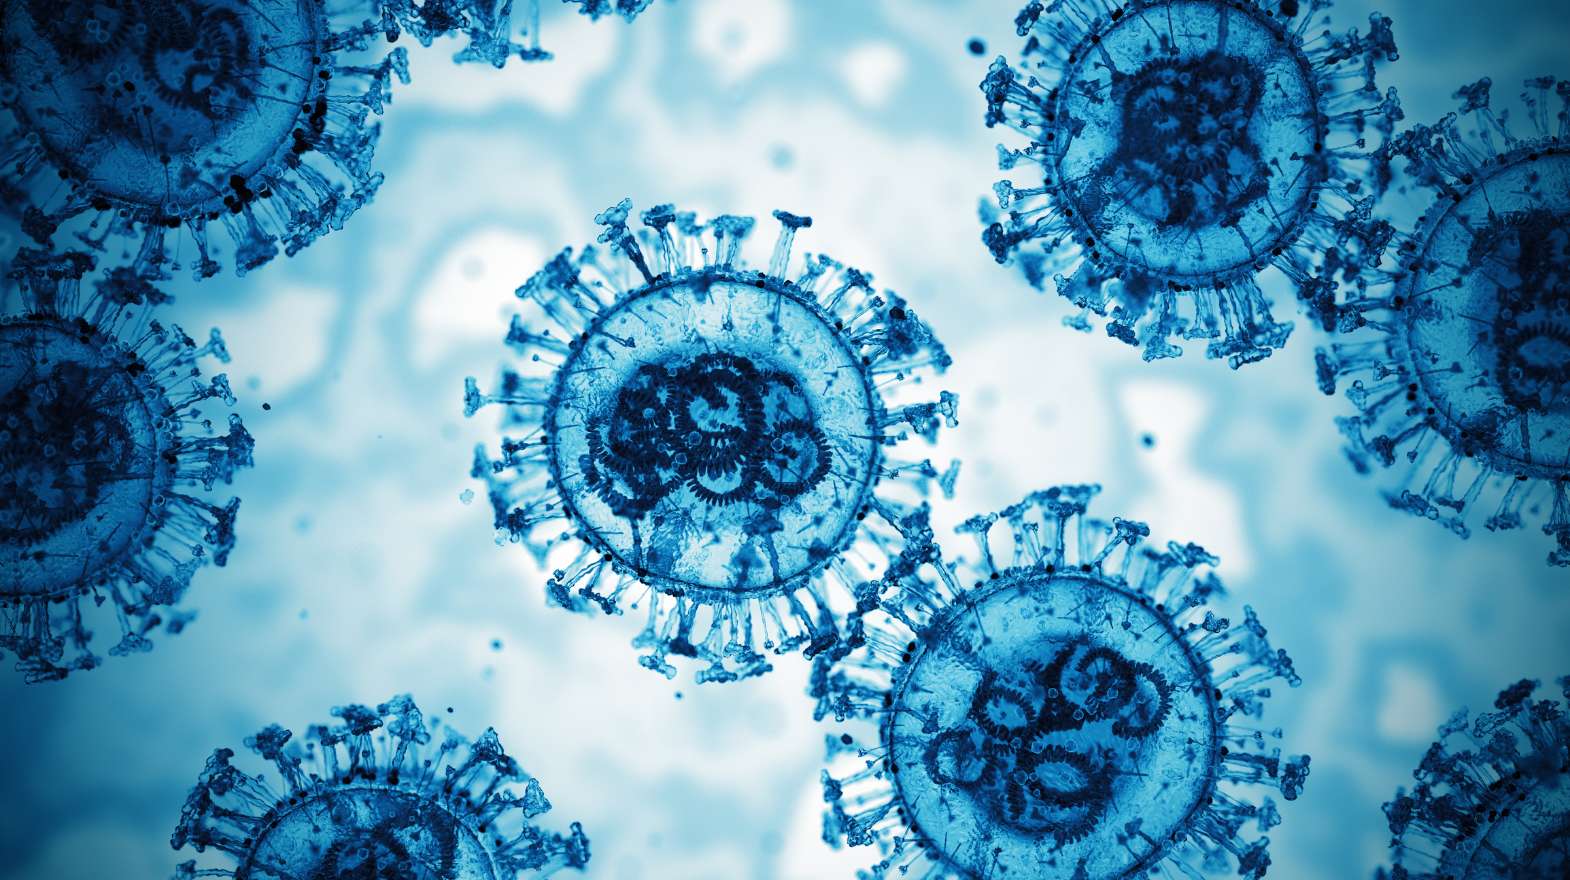 Microscopic view of coronavirus SARS-CoV-2